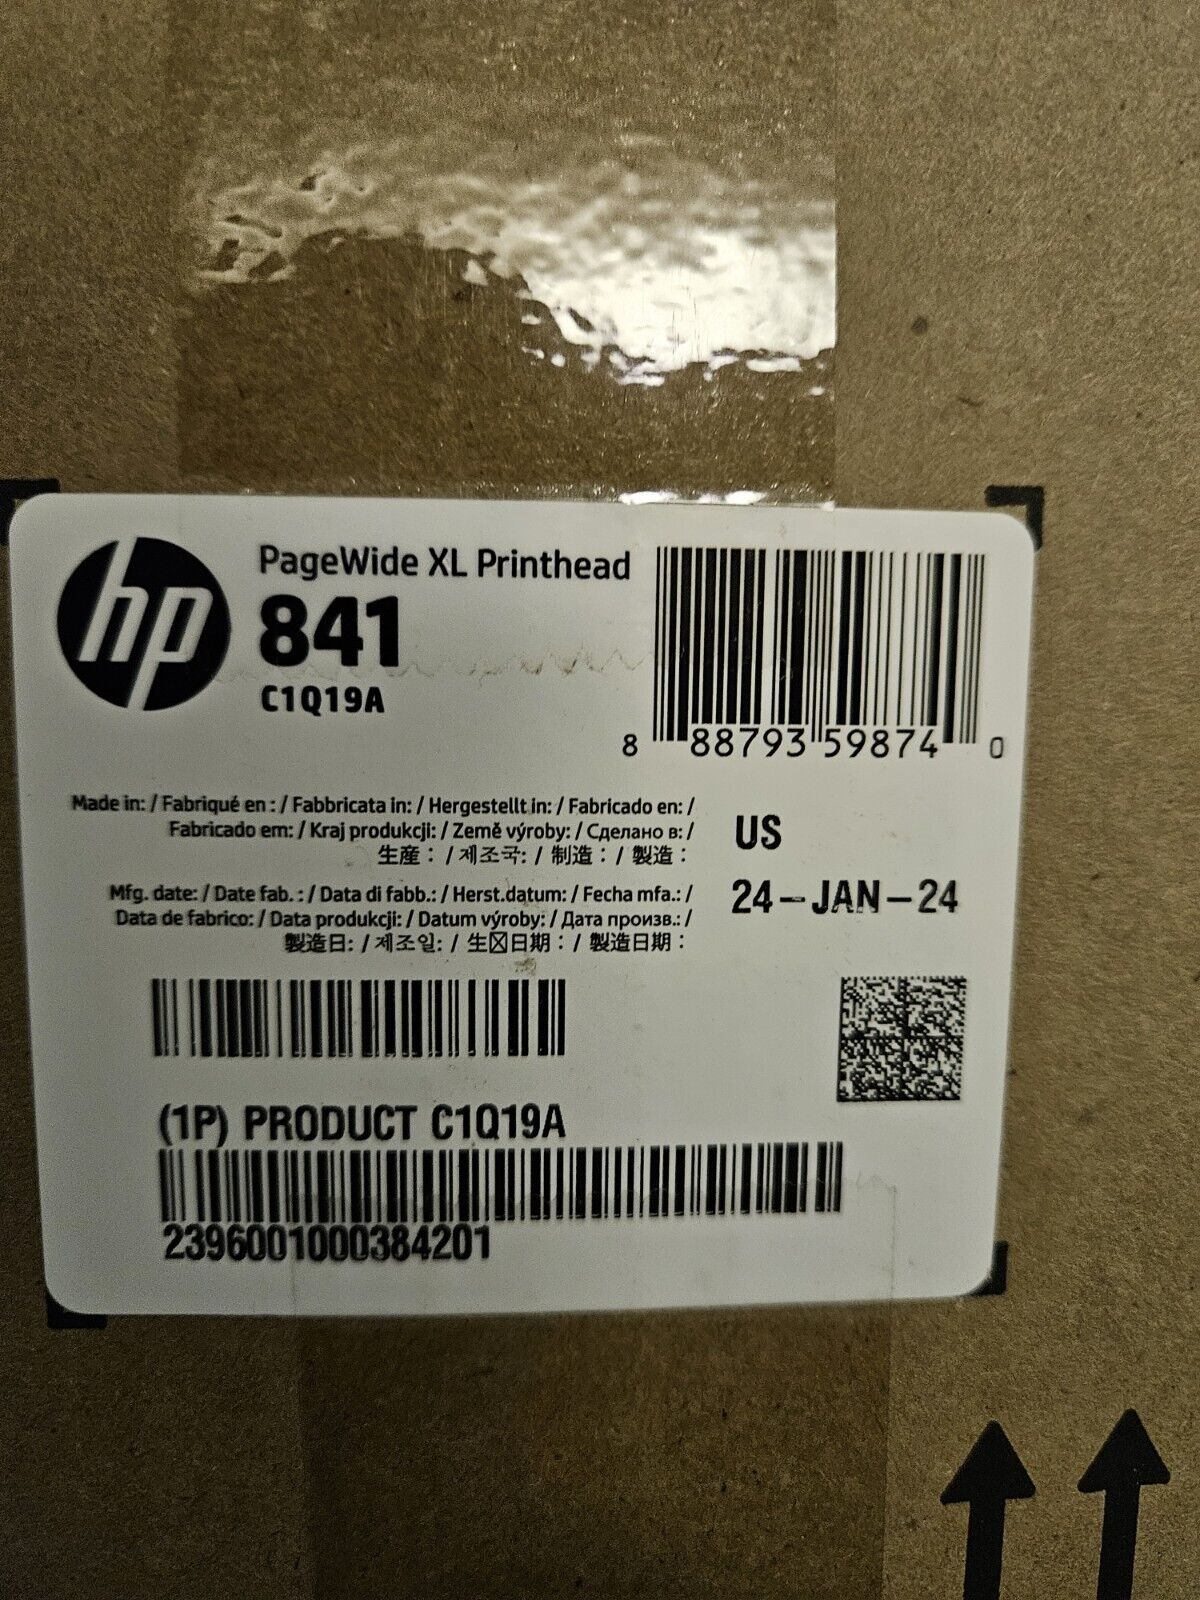 HP 841 PageWide XL Printhead - C1Q19A